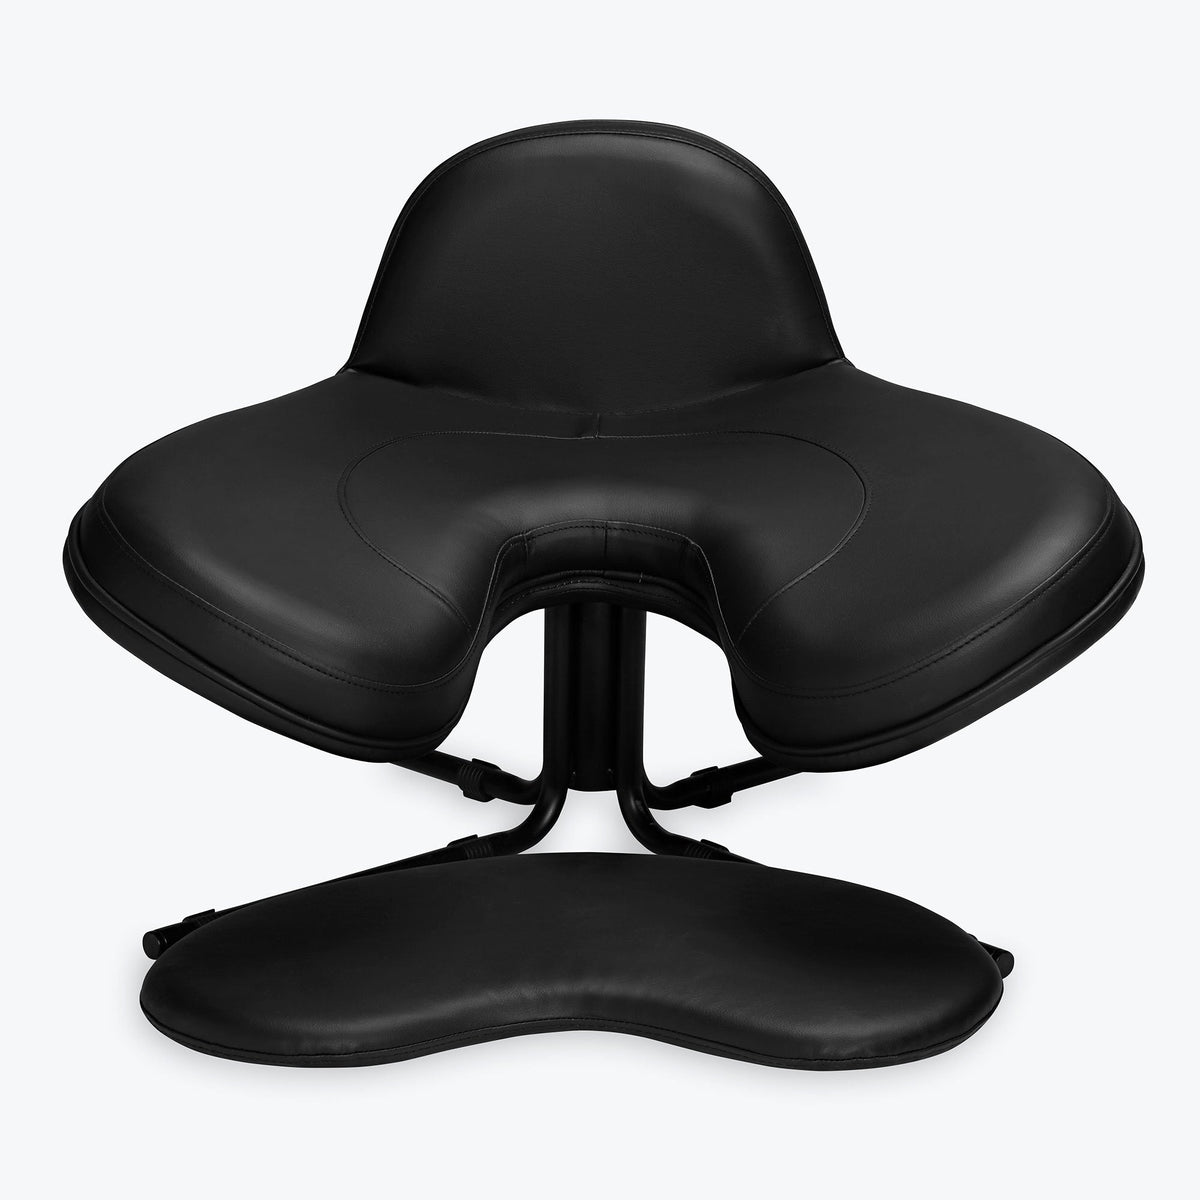 Evolution Meditation Chair